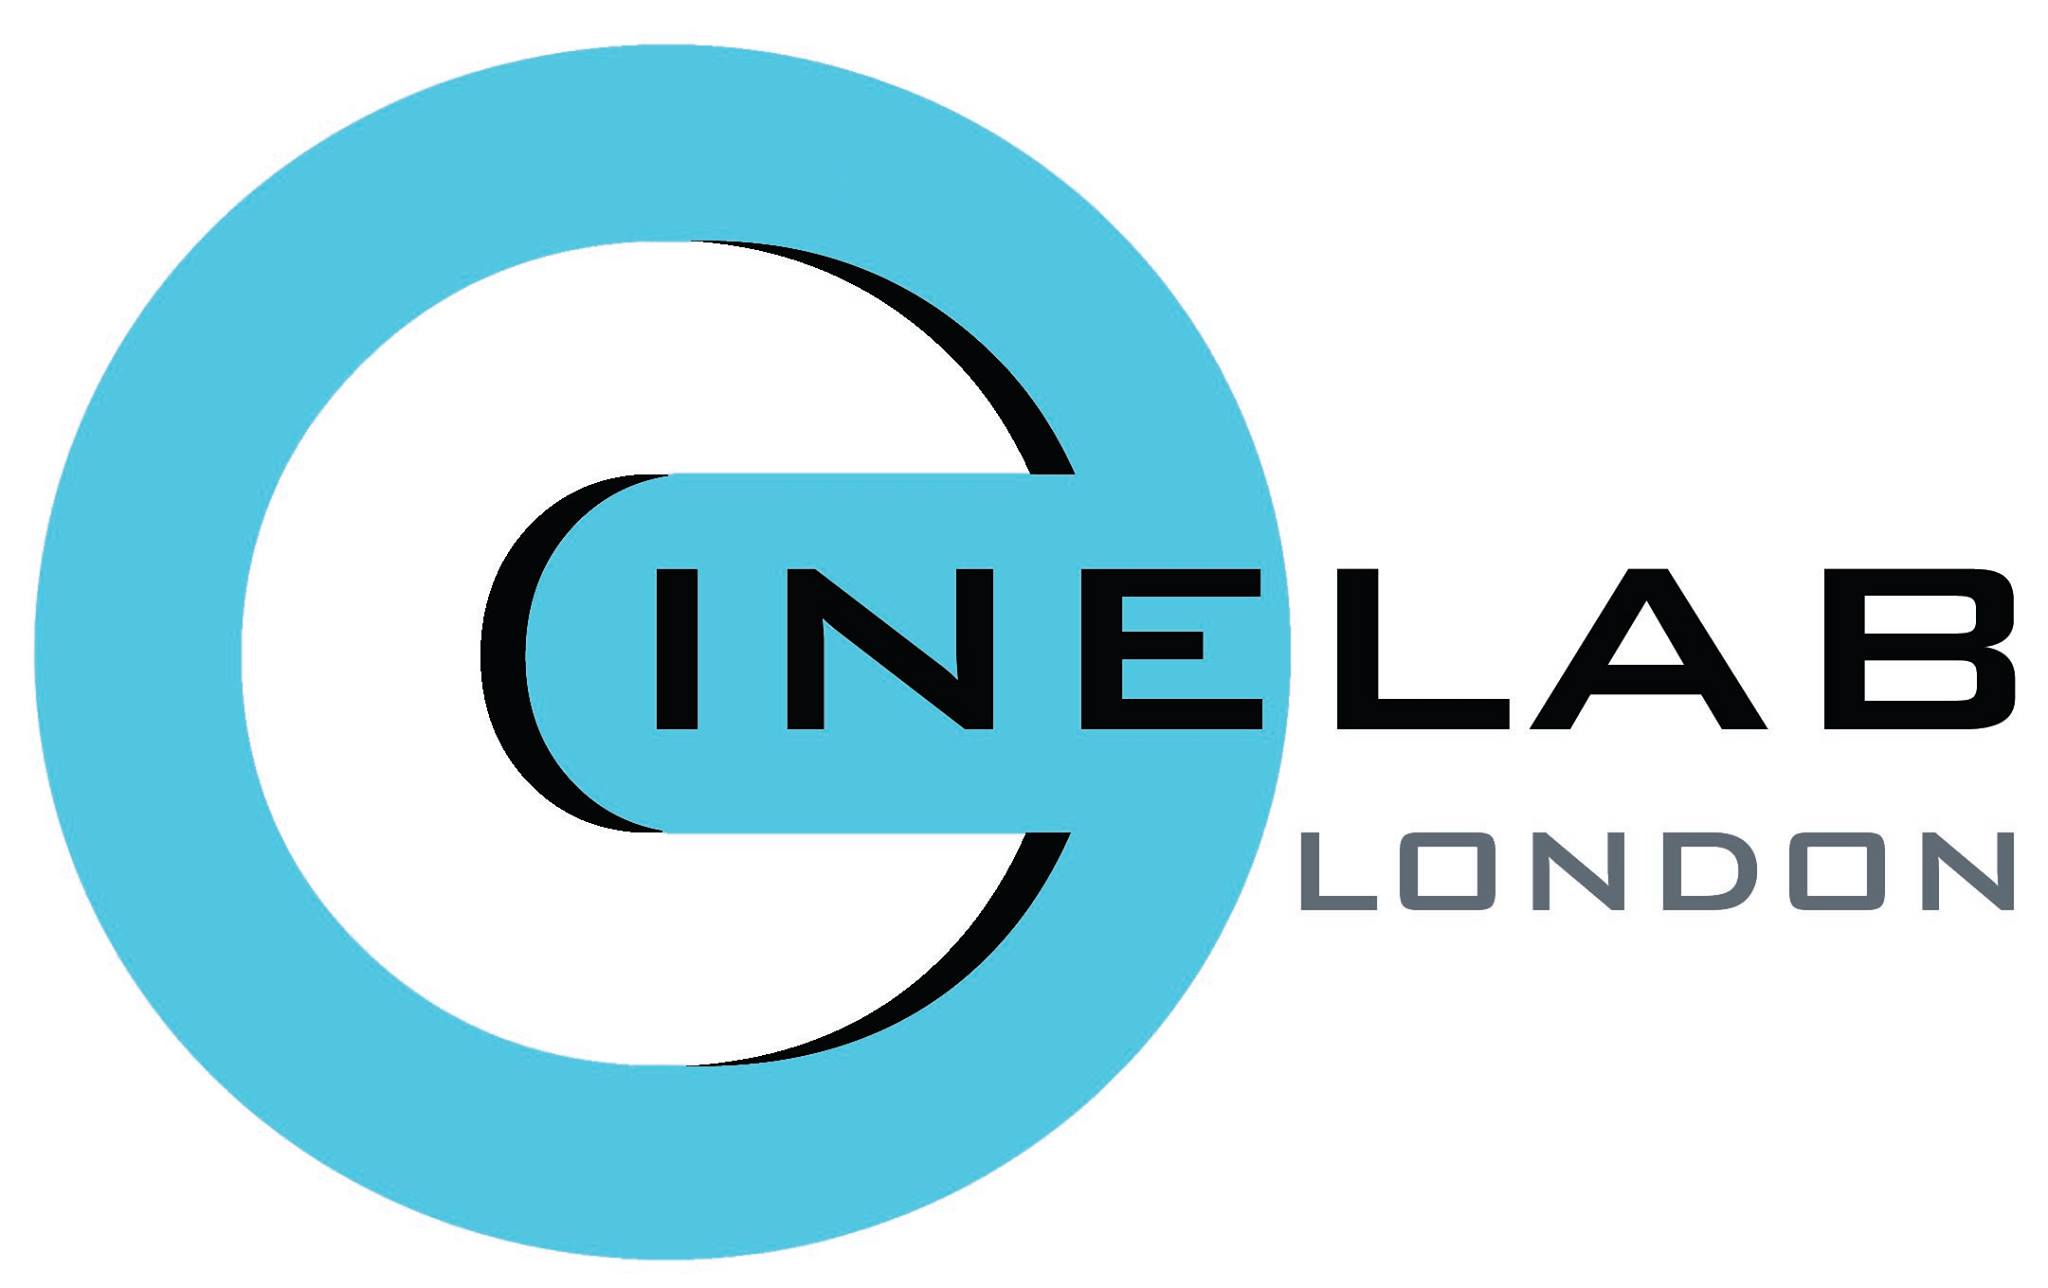 Cinelab London